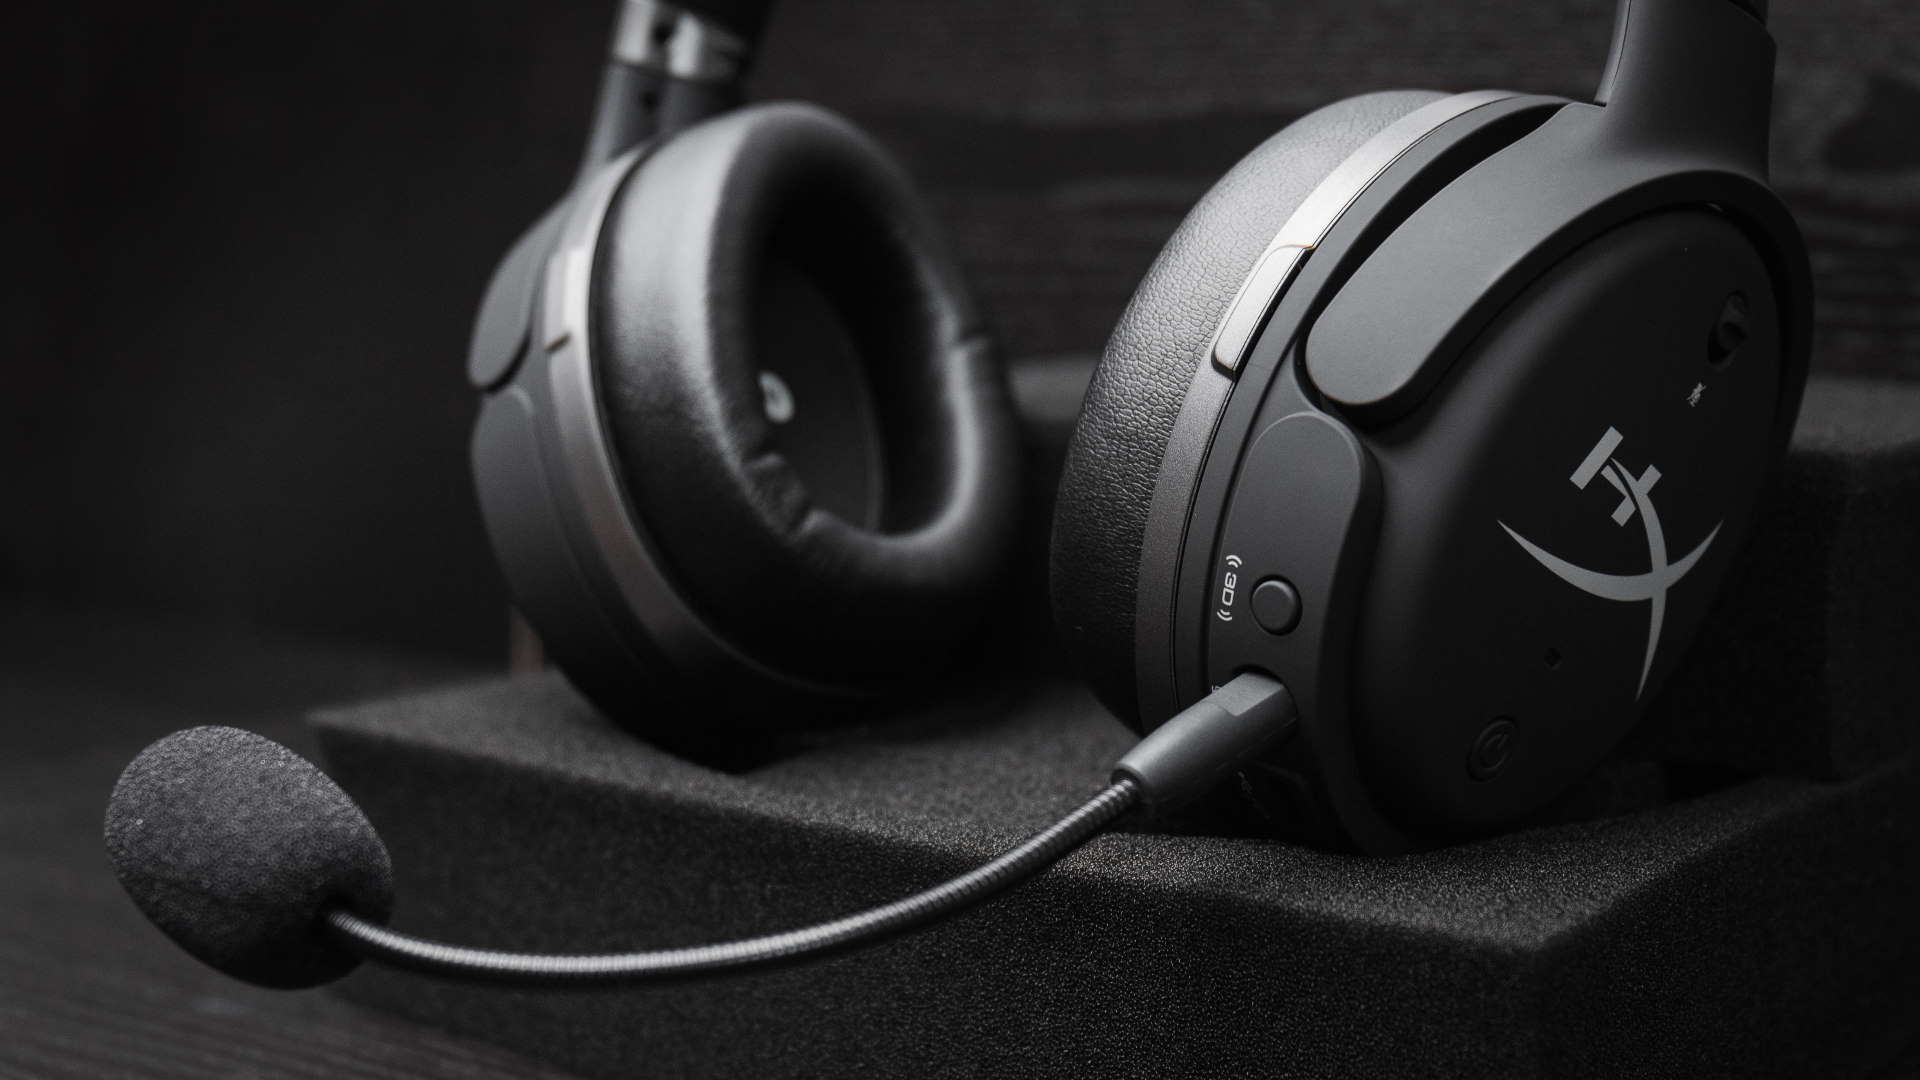 Review Logitech G432 - ¿Los mejores auriculares de la marca?